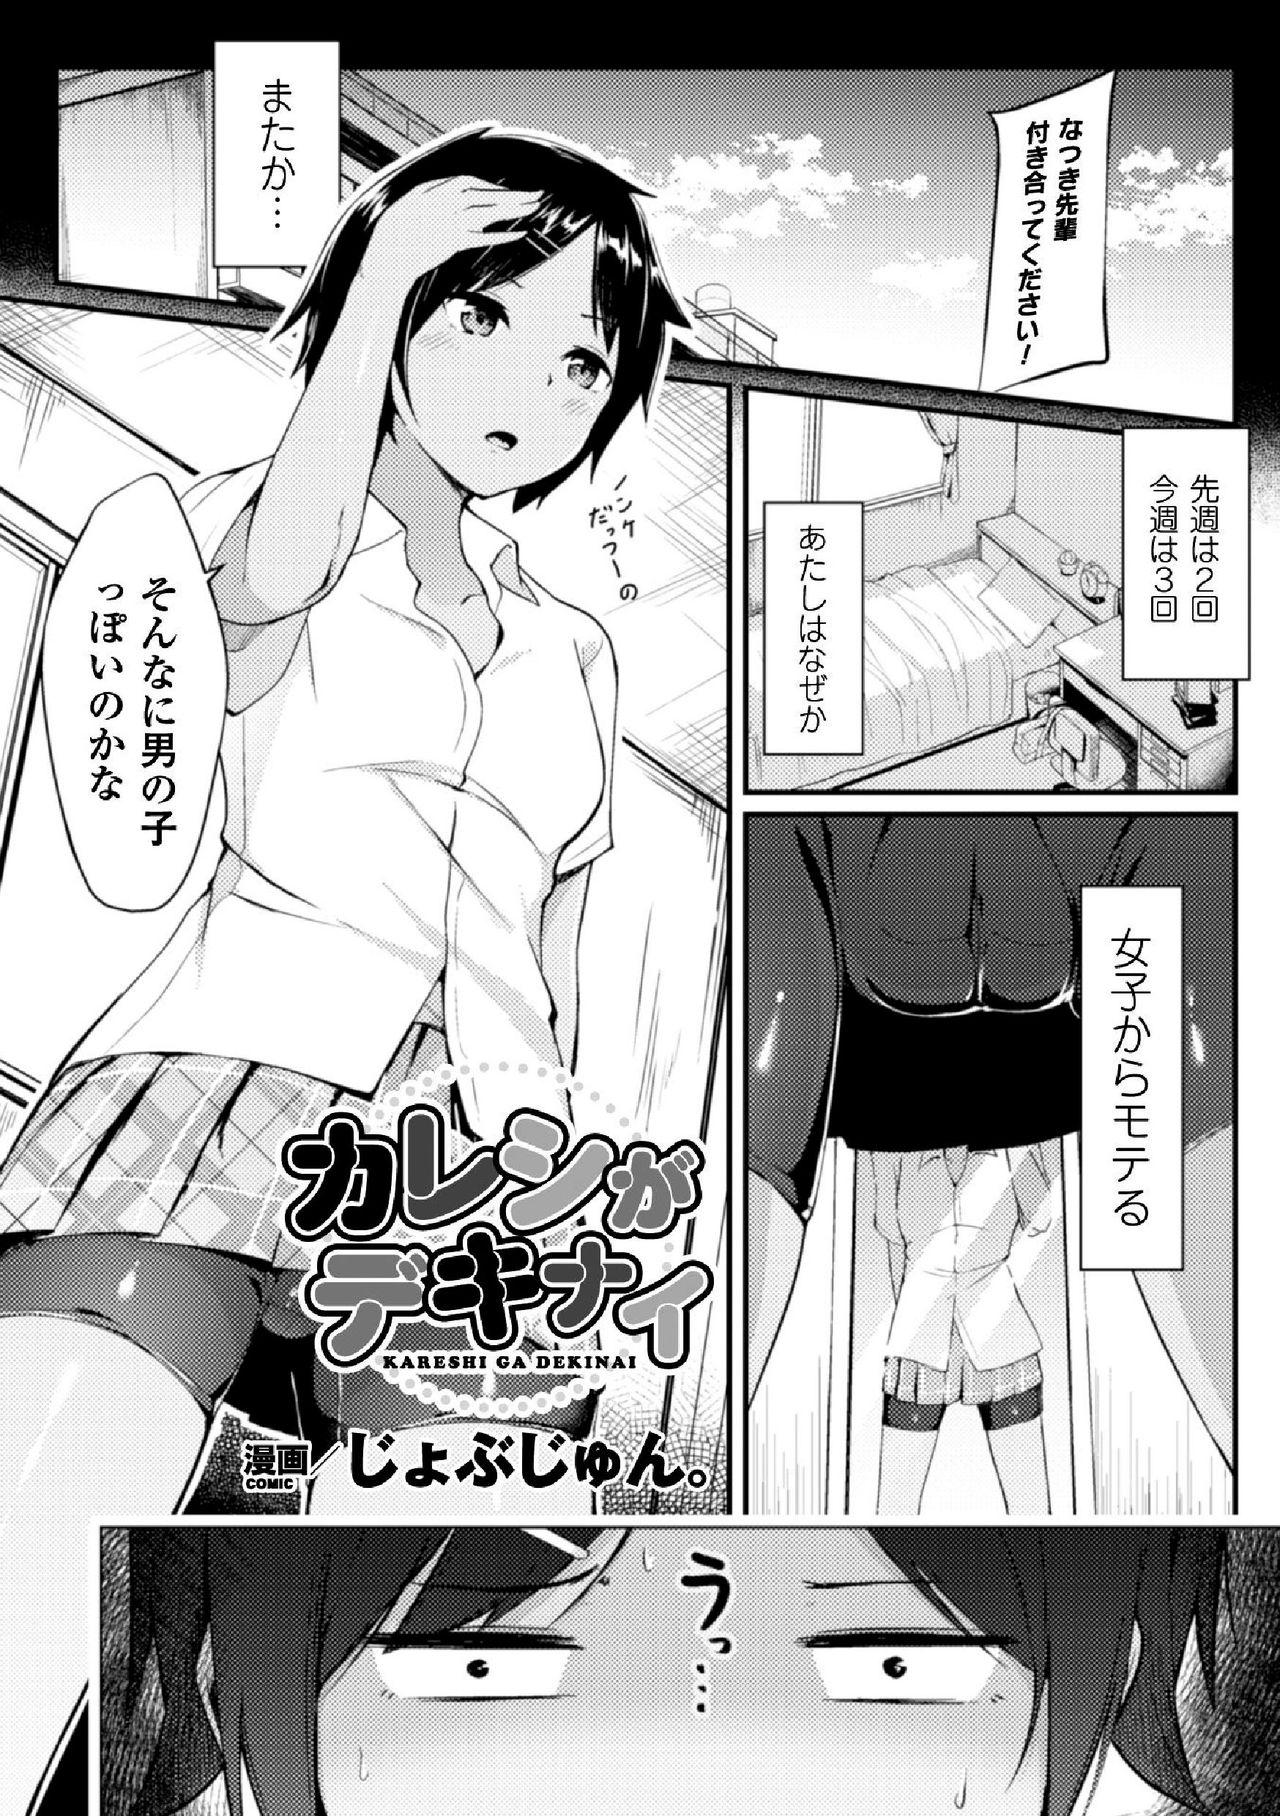 2D Comic Magazine TS Jibun Heroine mou Hitori no Ore ga Erosugite Gaman Dekinee! Vol. 2 62